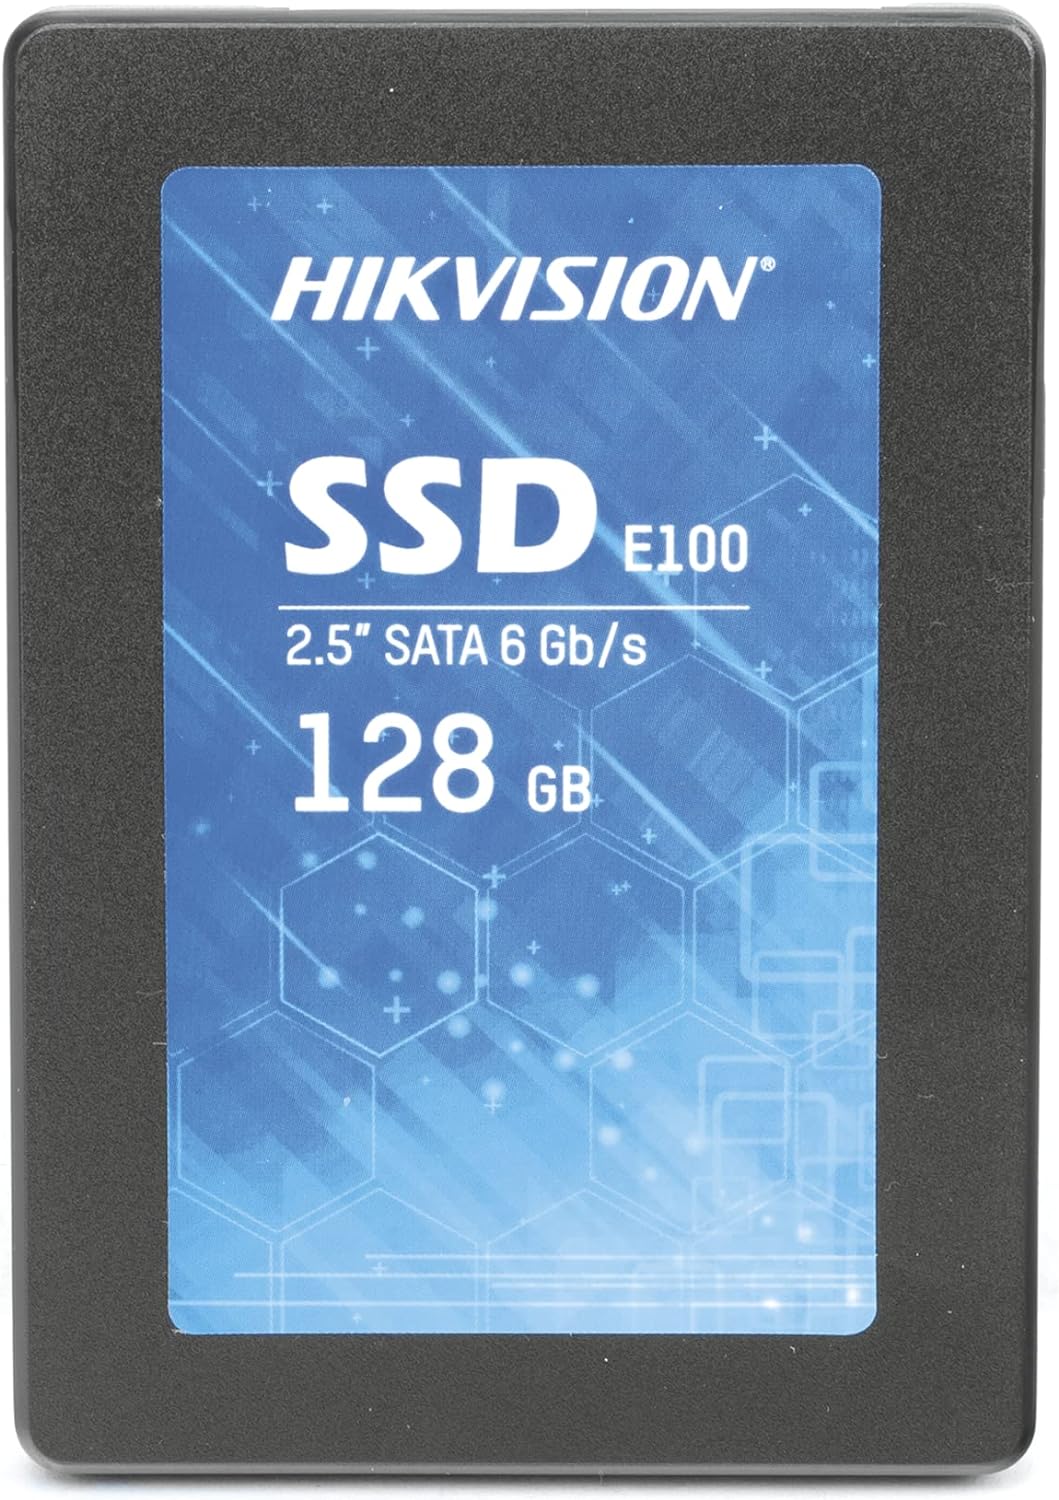 Hikvision E-100 SSD 128GB